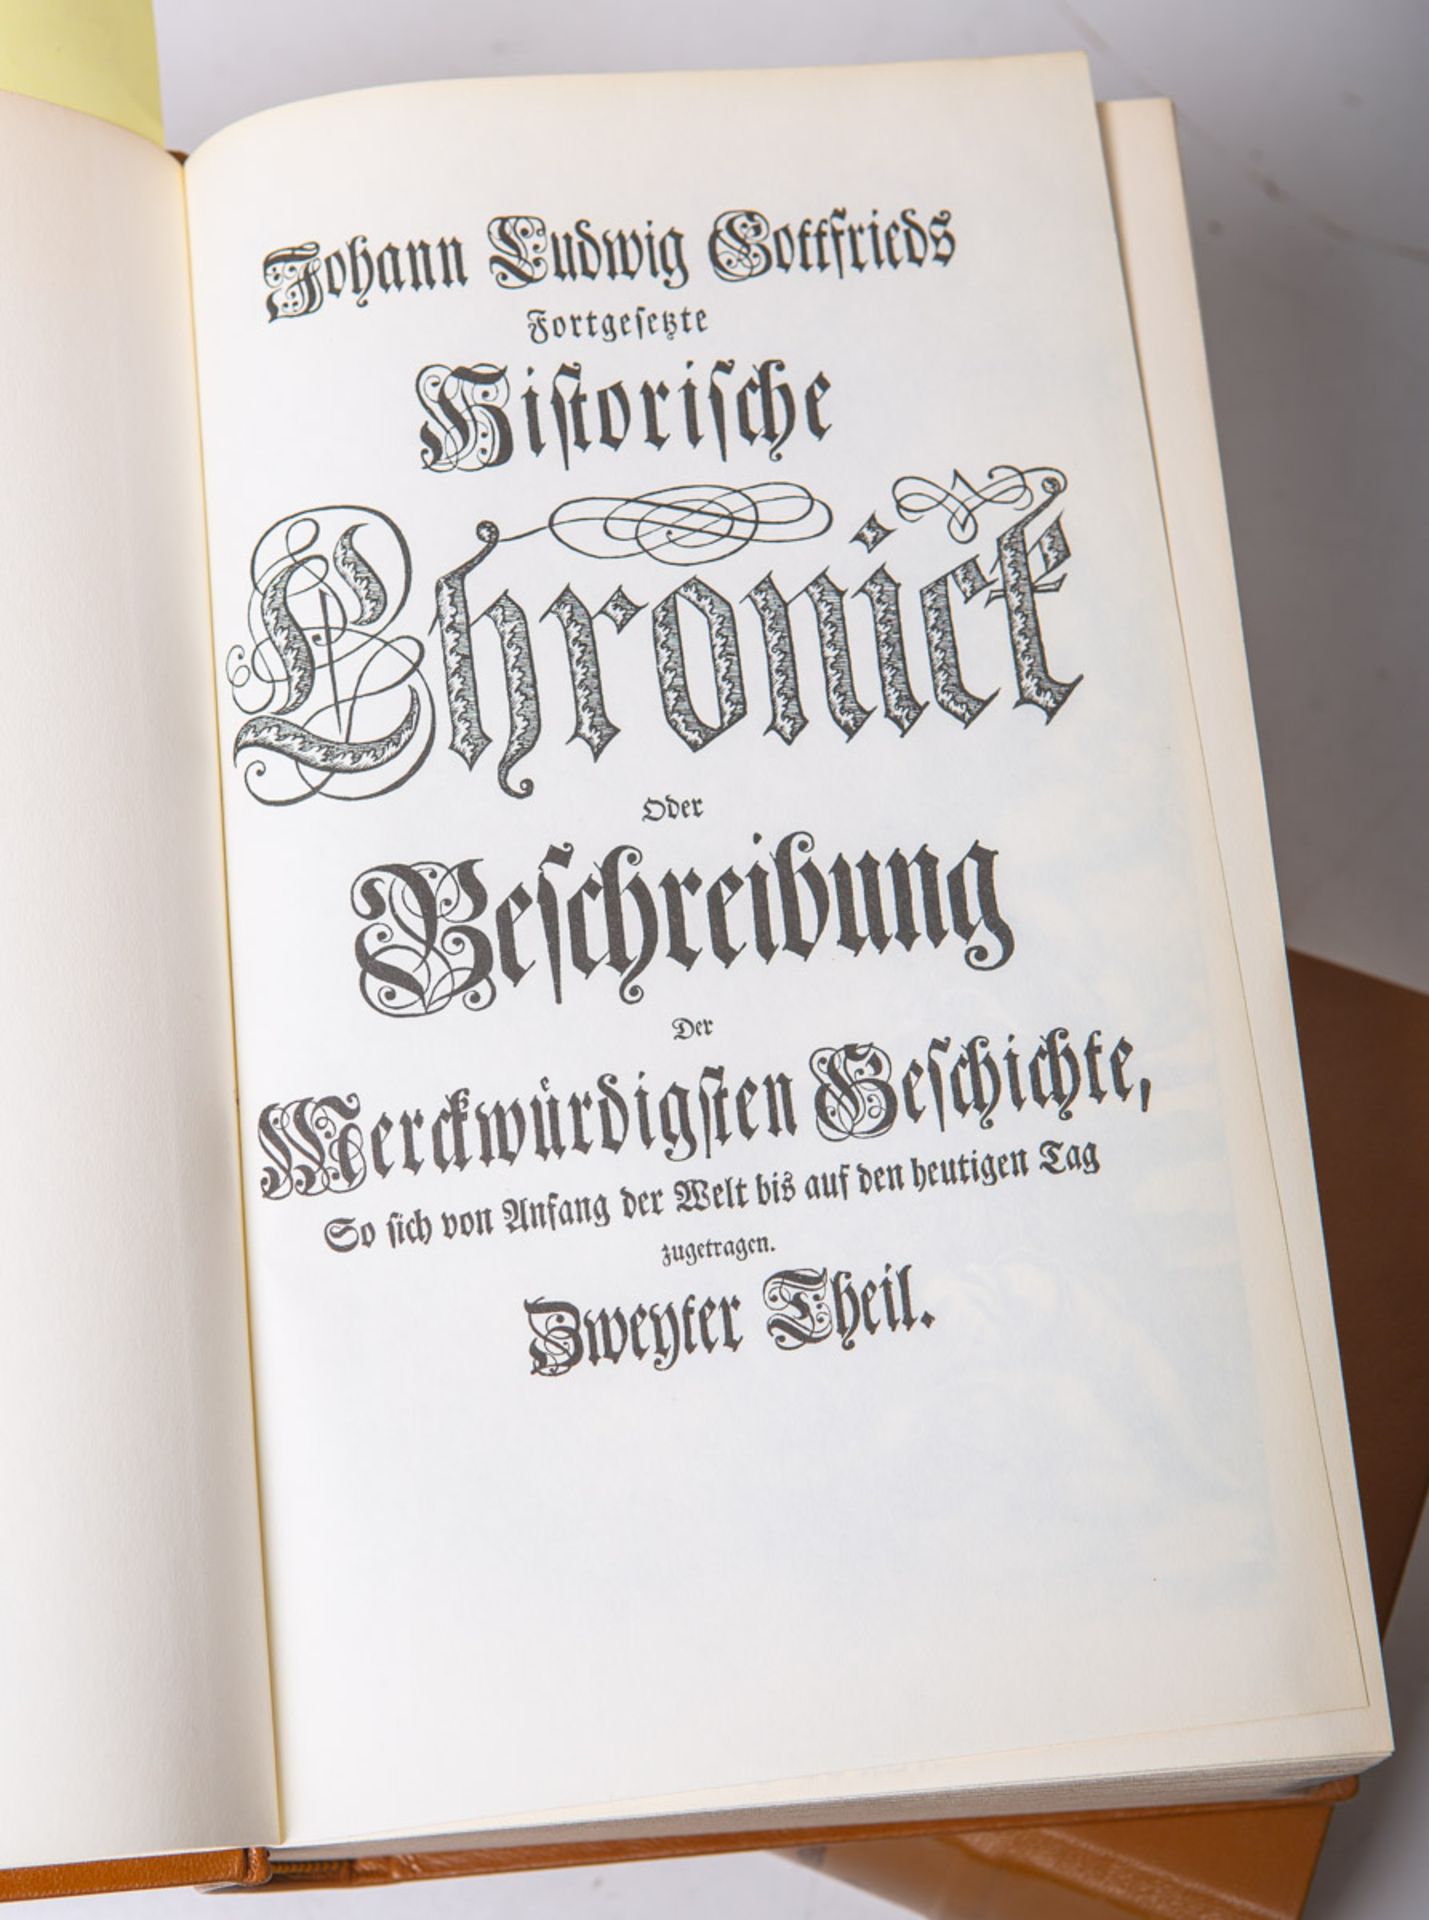 Gottfried, Johann Ludwig, "Historische Chronick", Faksimile-Ausgabe